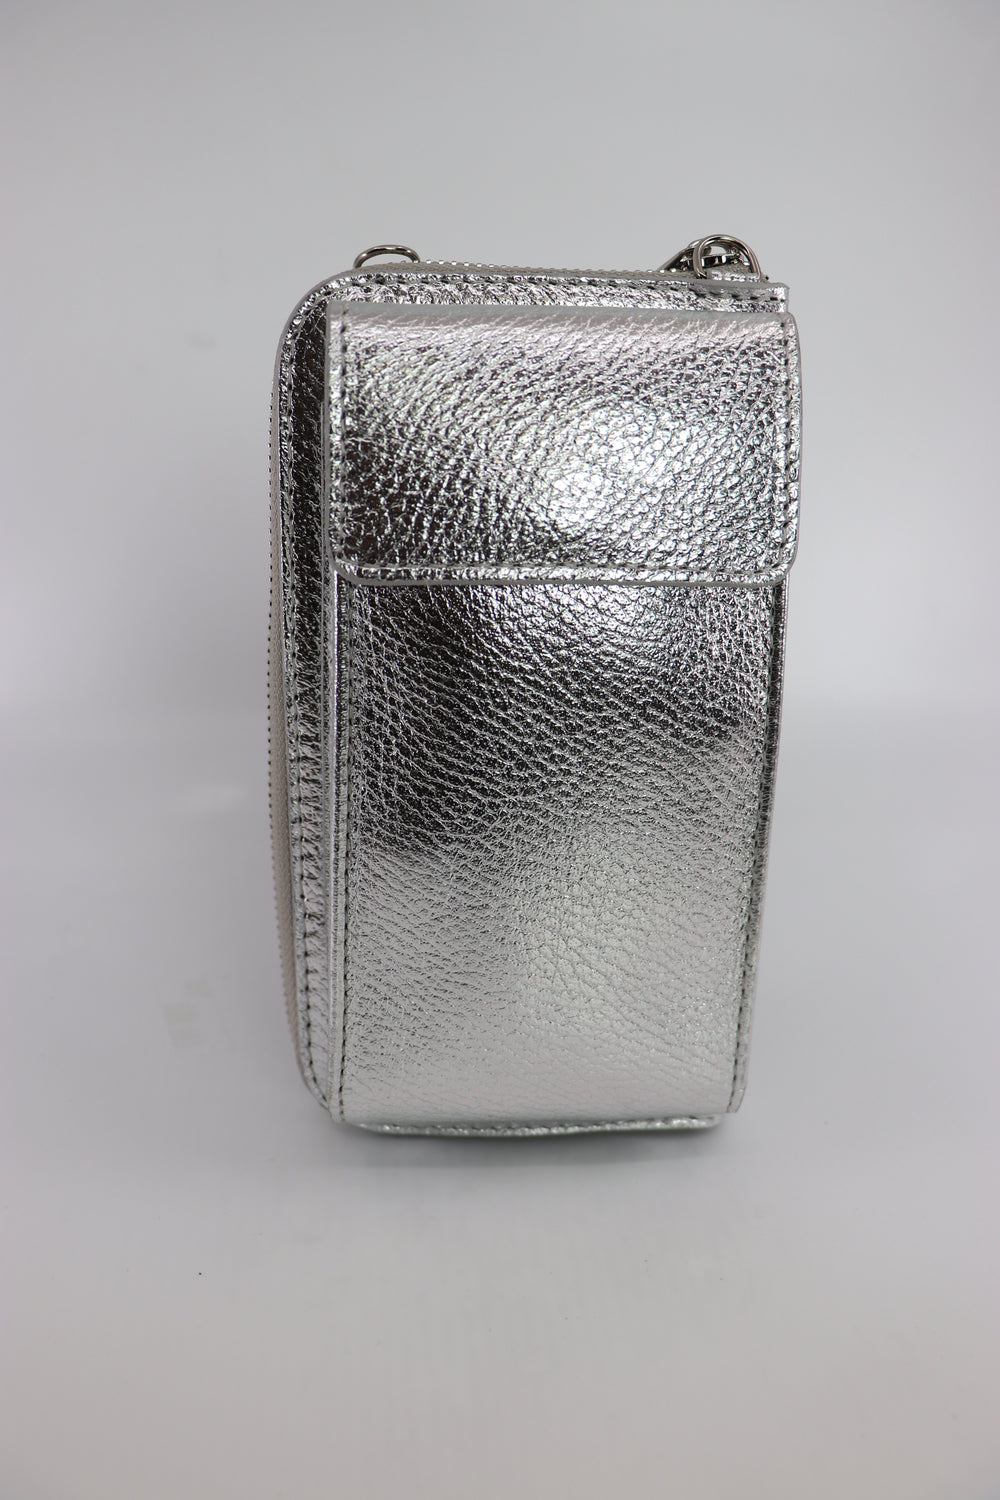 Bagitali Crossbody Leather Purse / Phone Bag - Silver